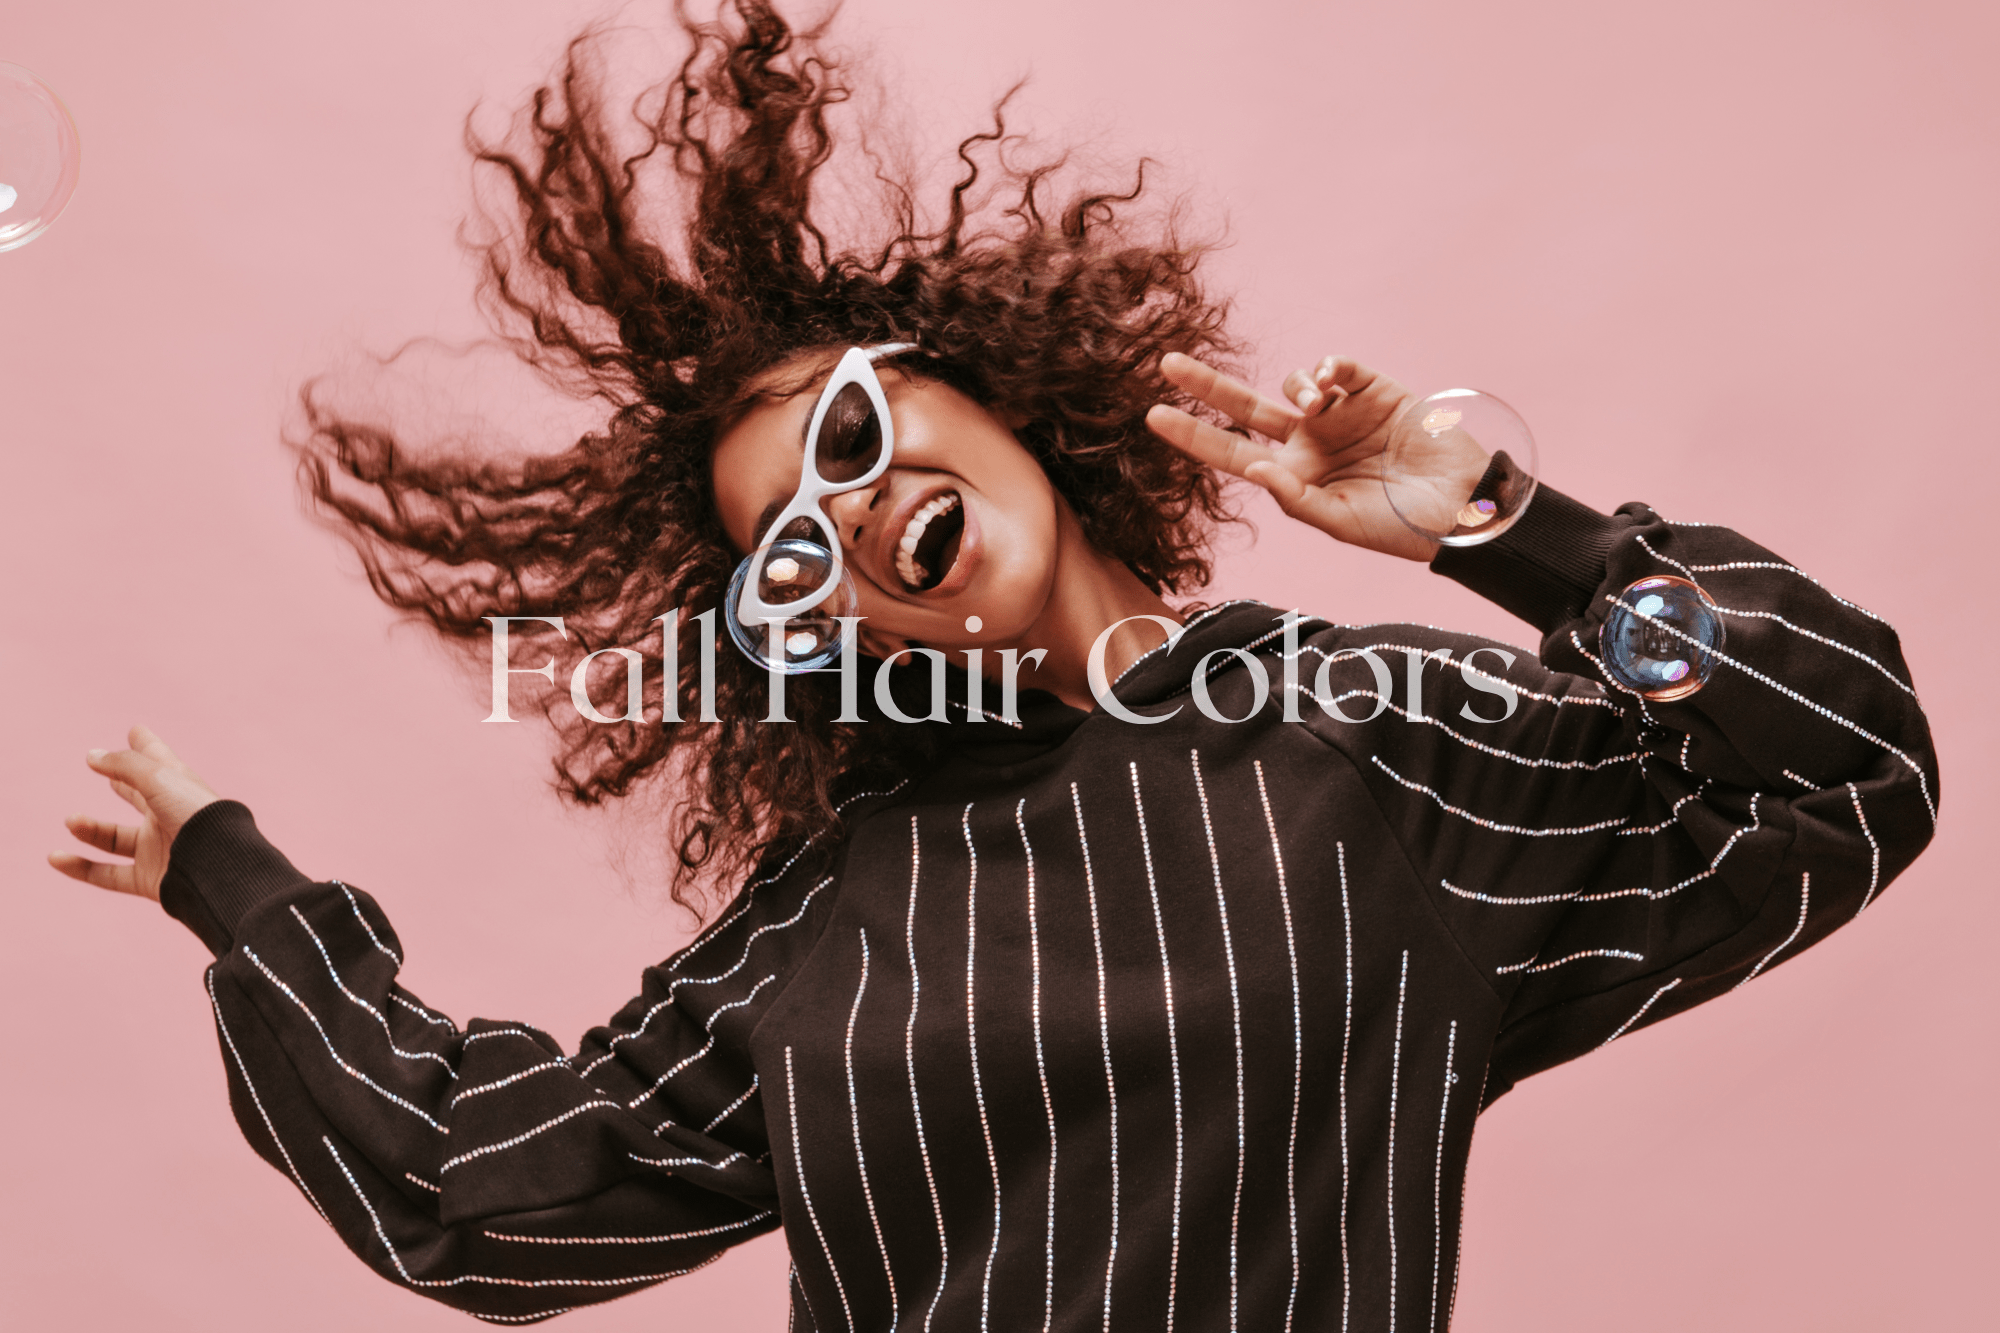 Fall Hair Colors: Fall hair color trends